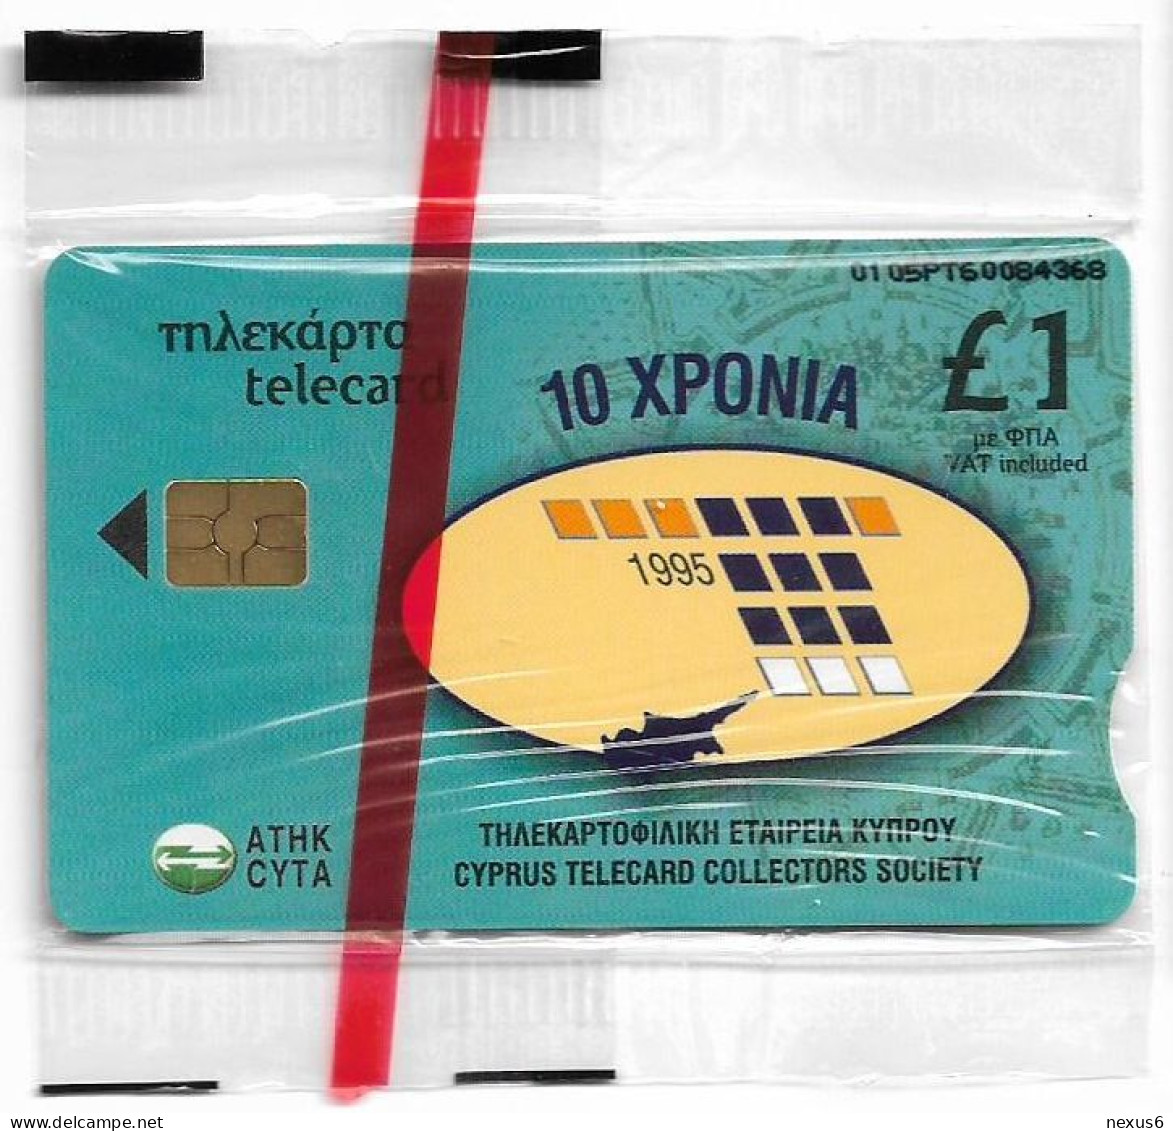 Cyprus - Cyta (Chip) - 10 Years Cyprus Telecard Collector's Society - 0105PT - 03.2005, 2.000ex, NSB - Zypern